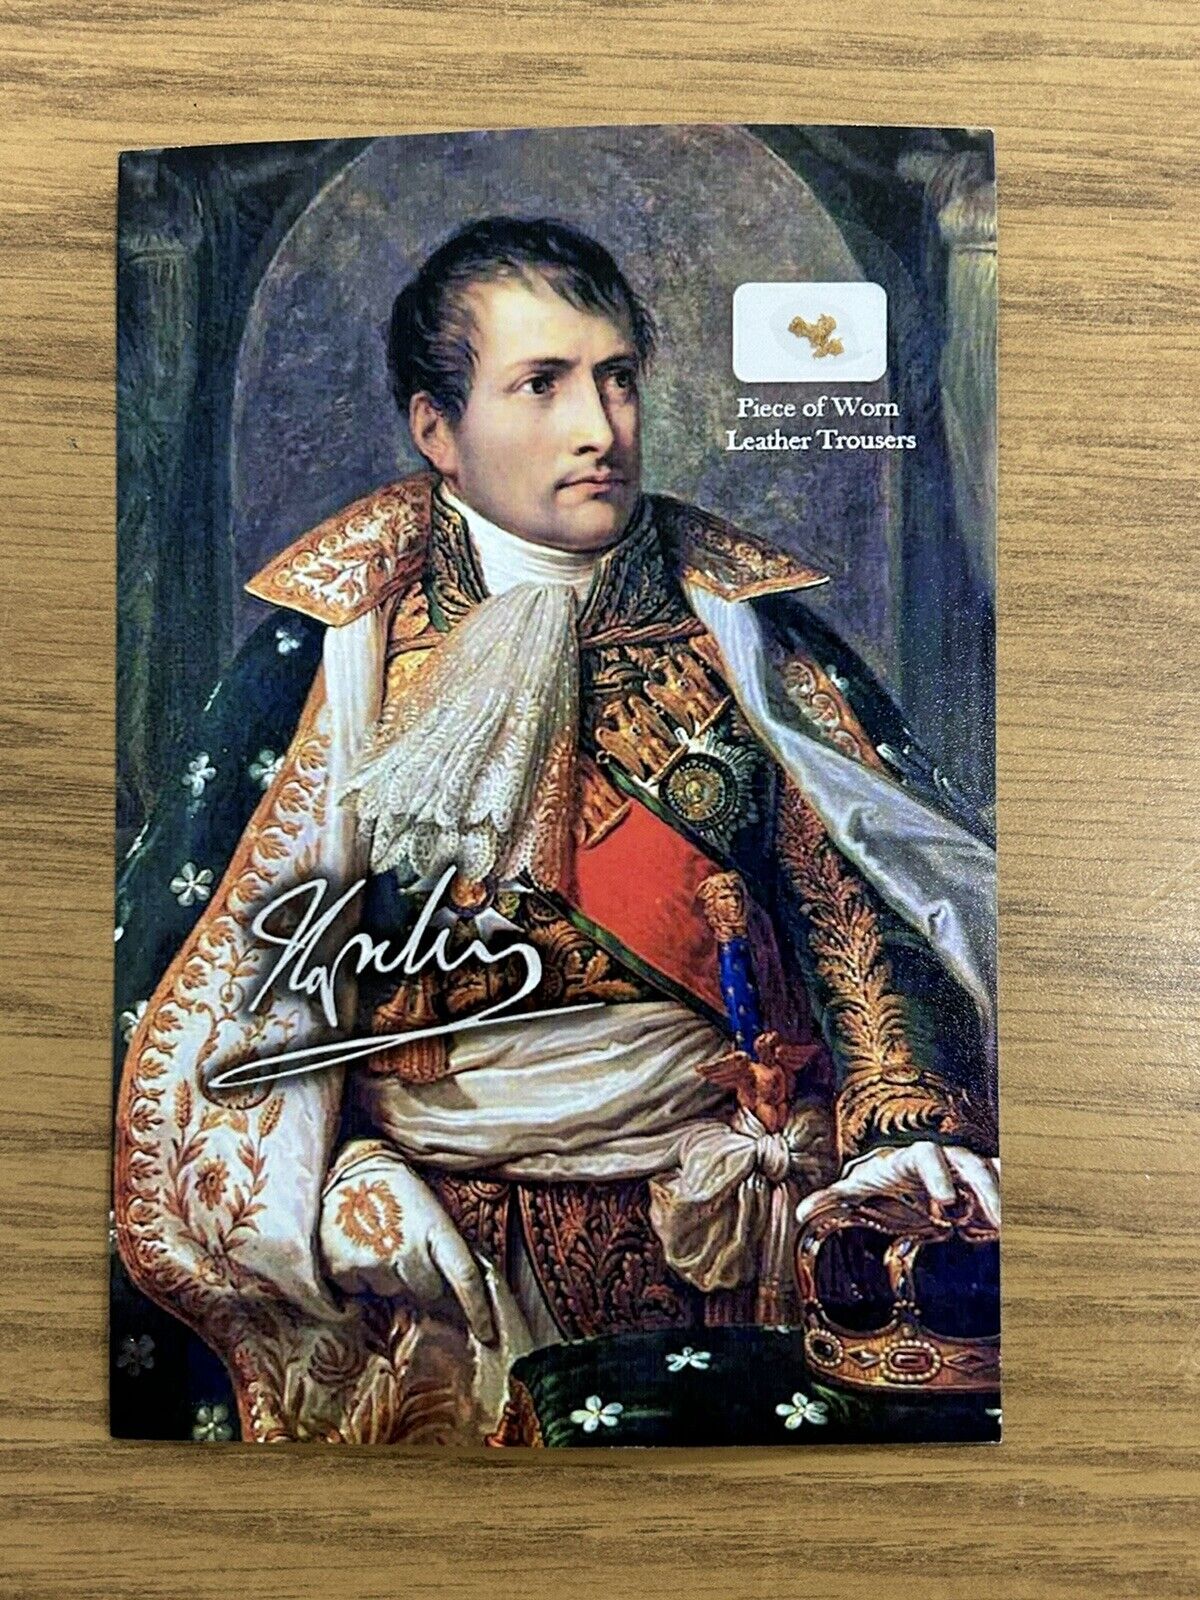 Napoleon Bonaparte Worn Leather Trousers Piece Speck Relic un signed